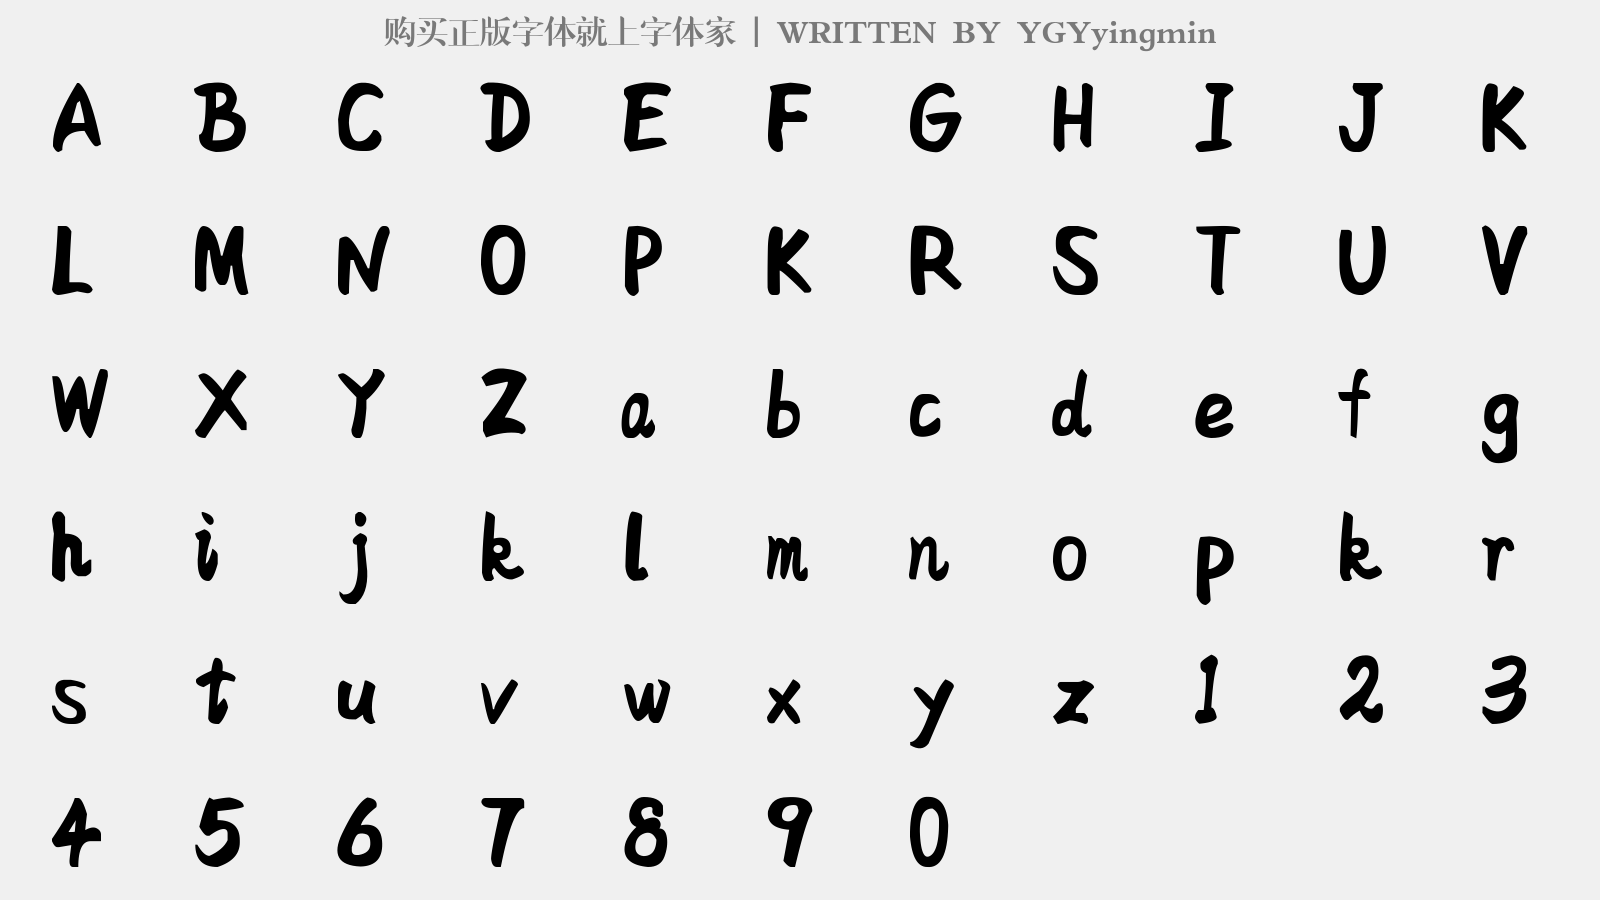 YGYyingmin - 大写字母/小写字母/数字